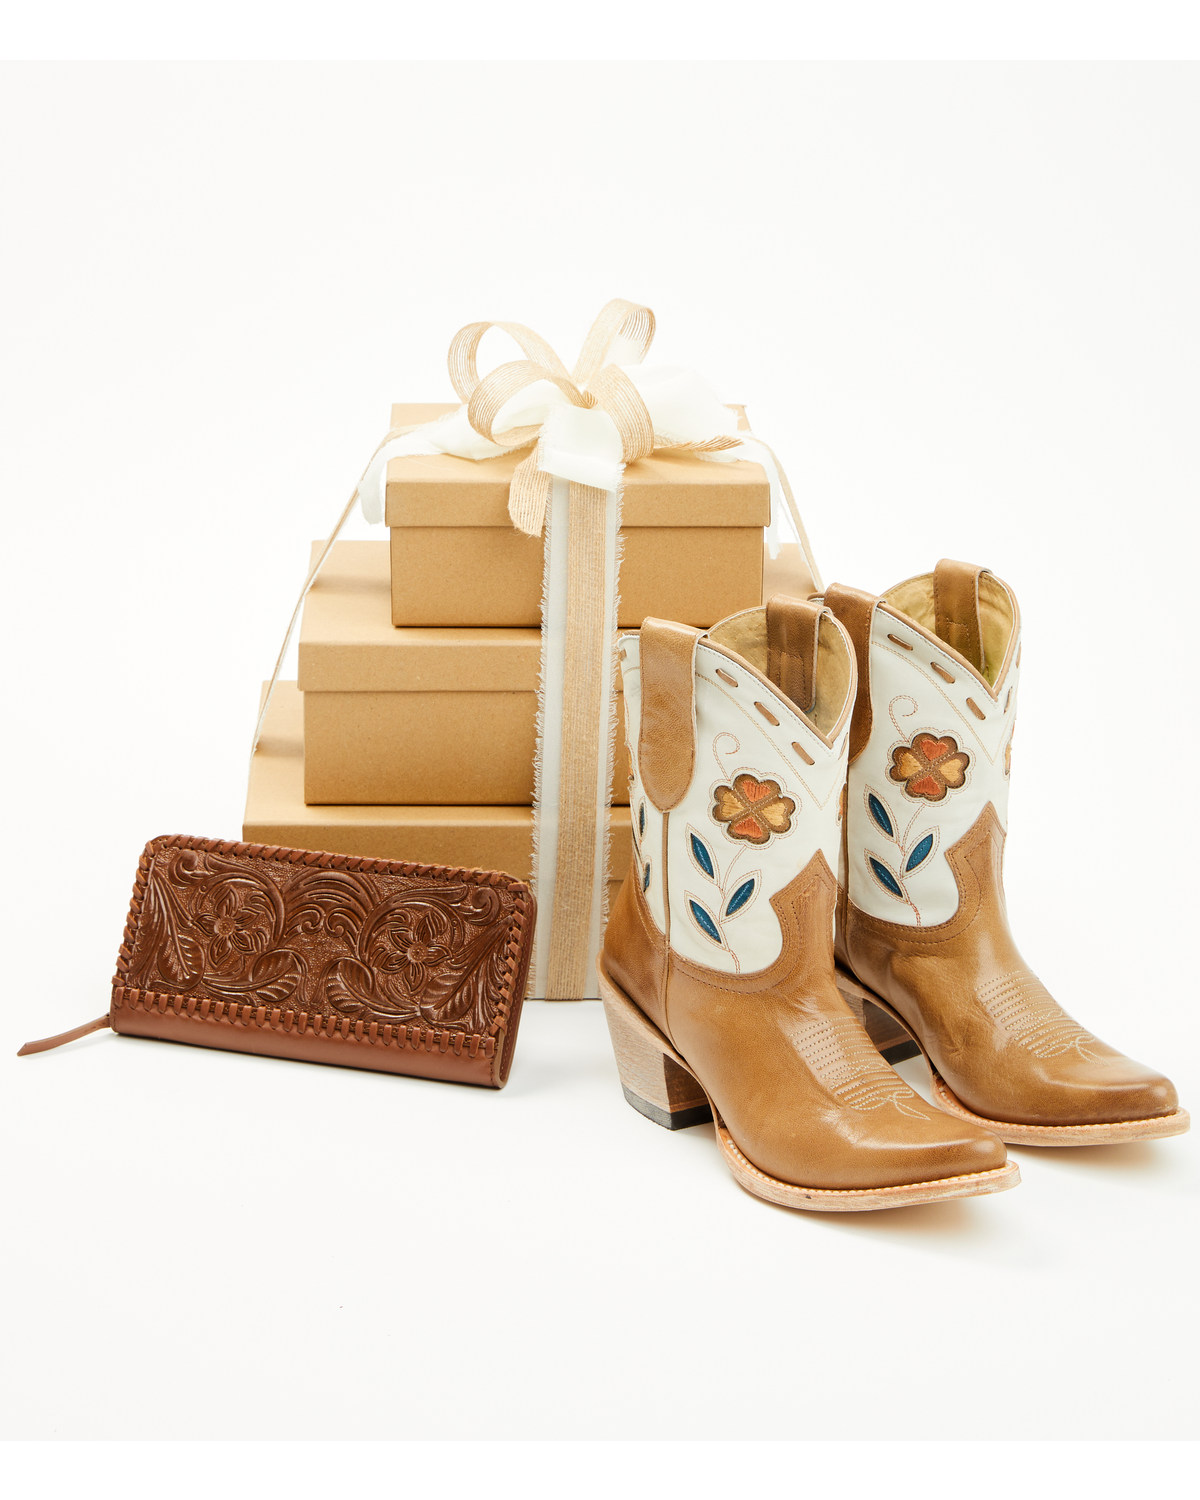 Boot Barn Women's Western Revival Gift Box - Bronze Package